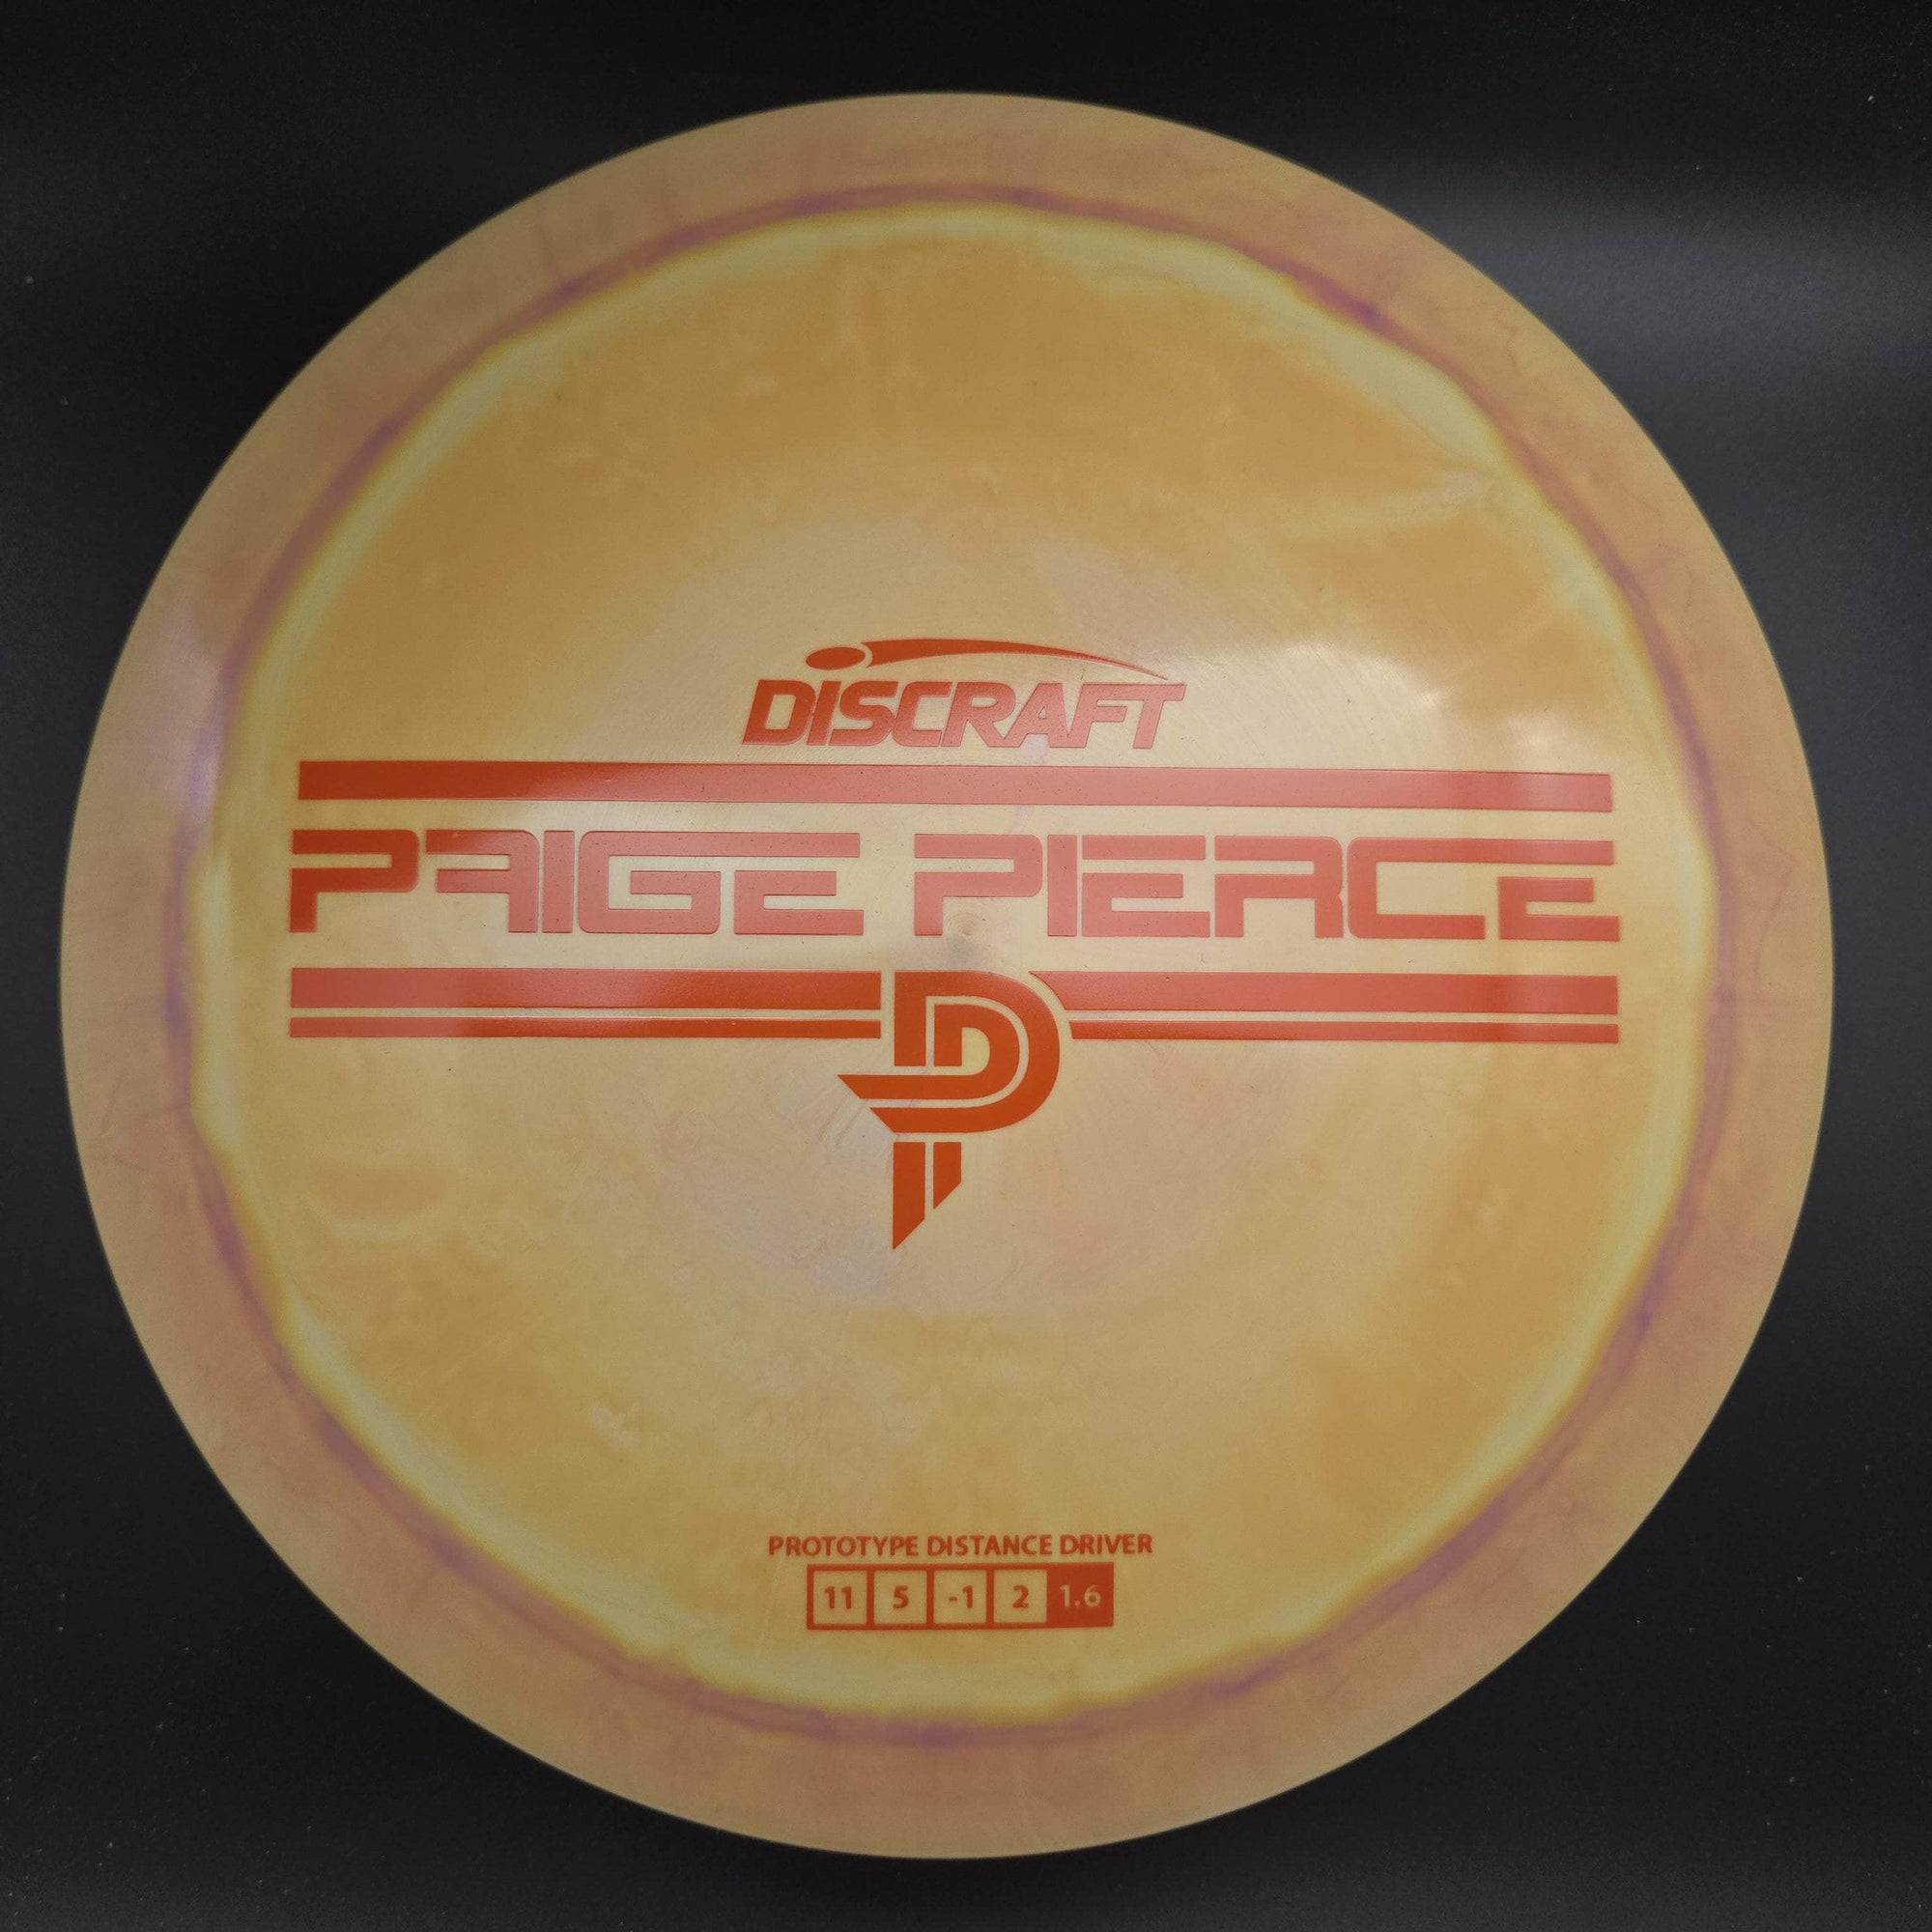 Discraft Distance Driver Yellow Orange Stamp 174g Drive, ESP, Paige Pierce Prototype